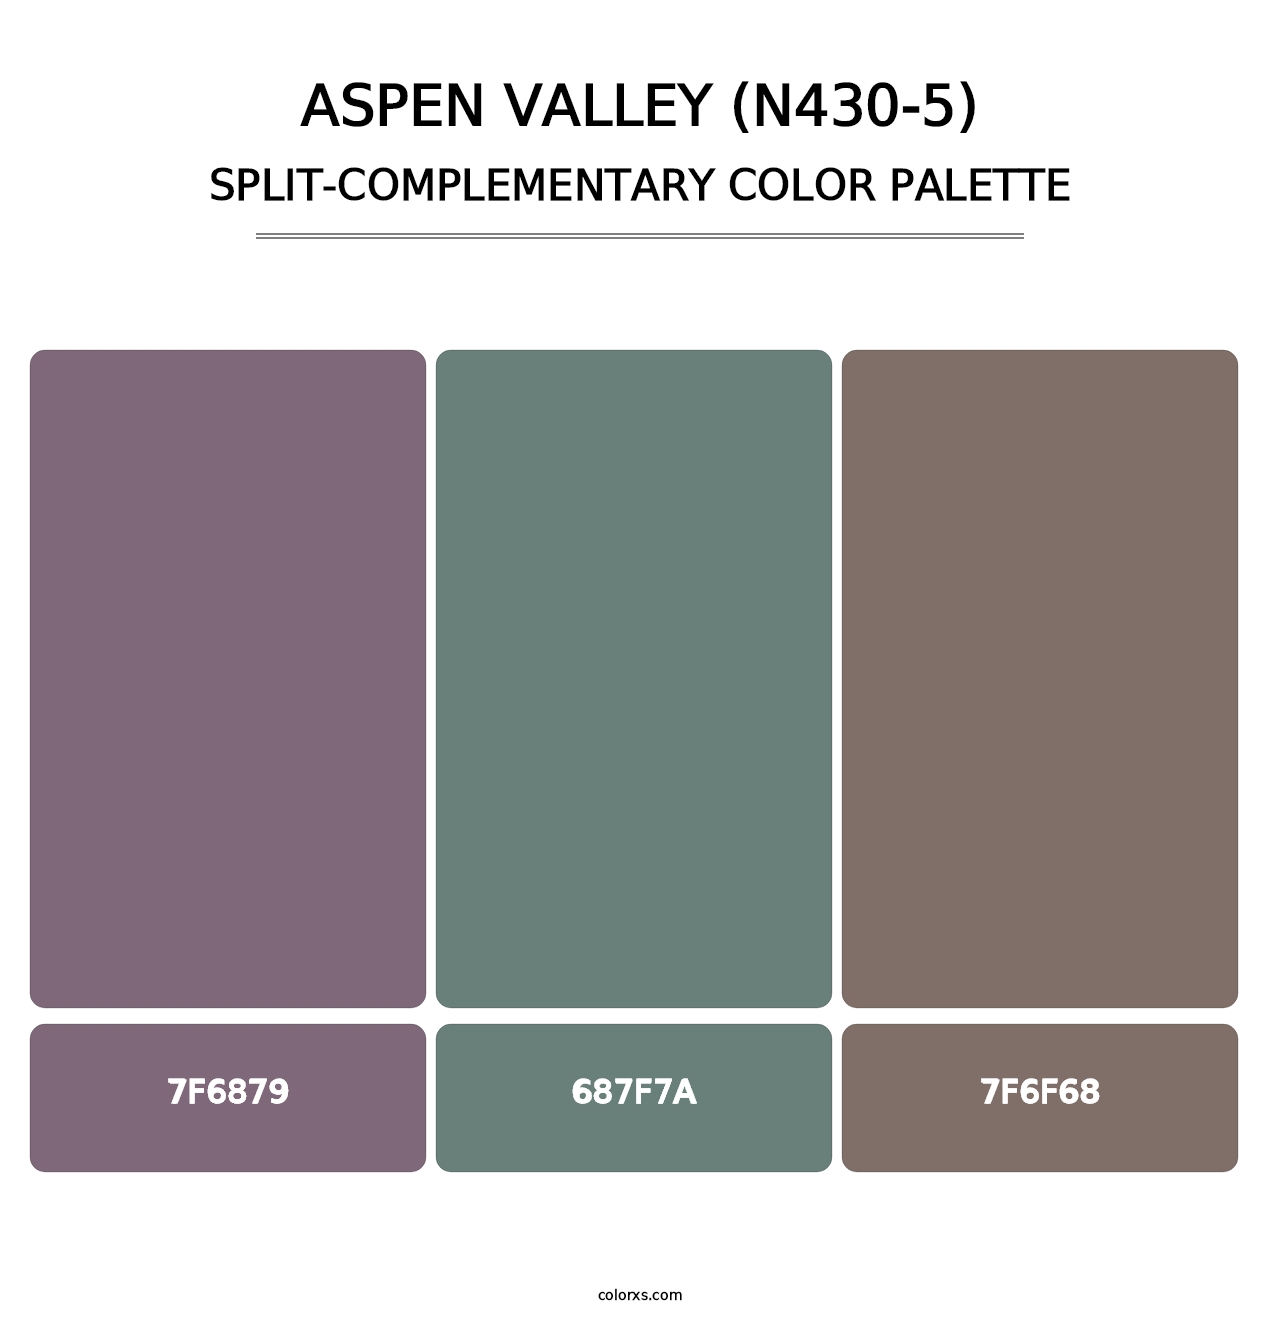 Aspen Valley (N430-5) - Split-Complementary Color Palette